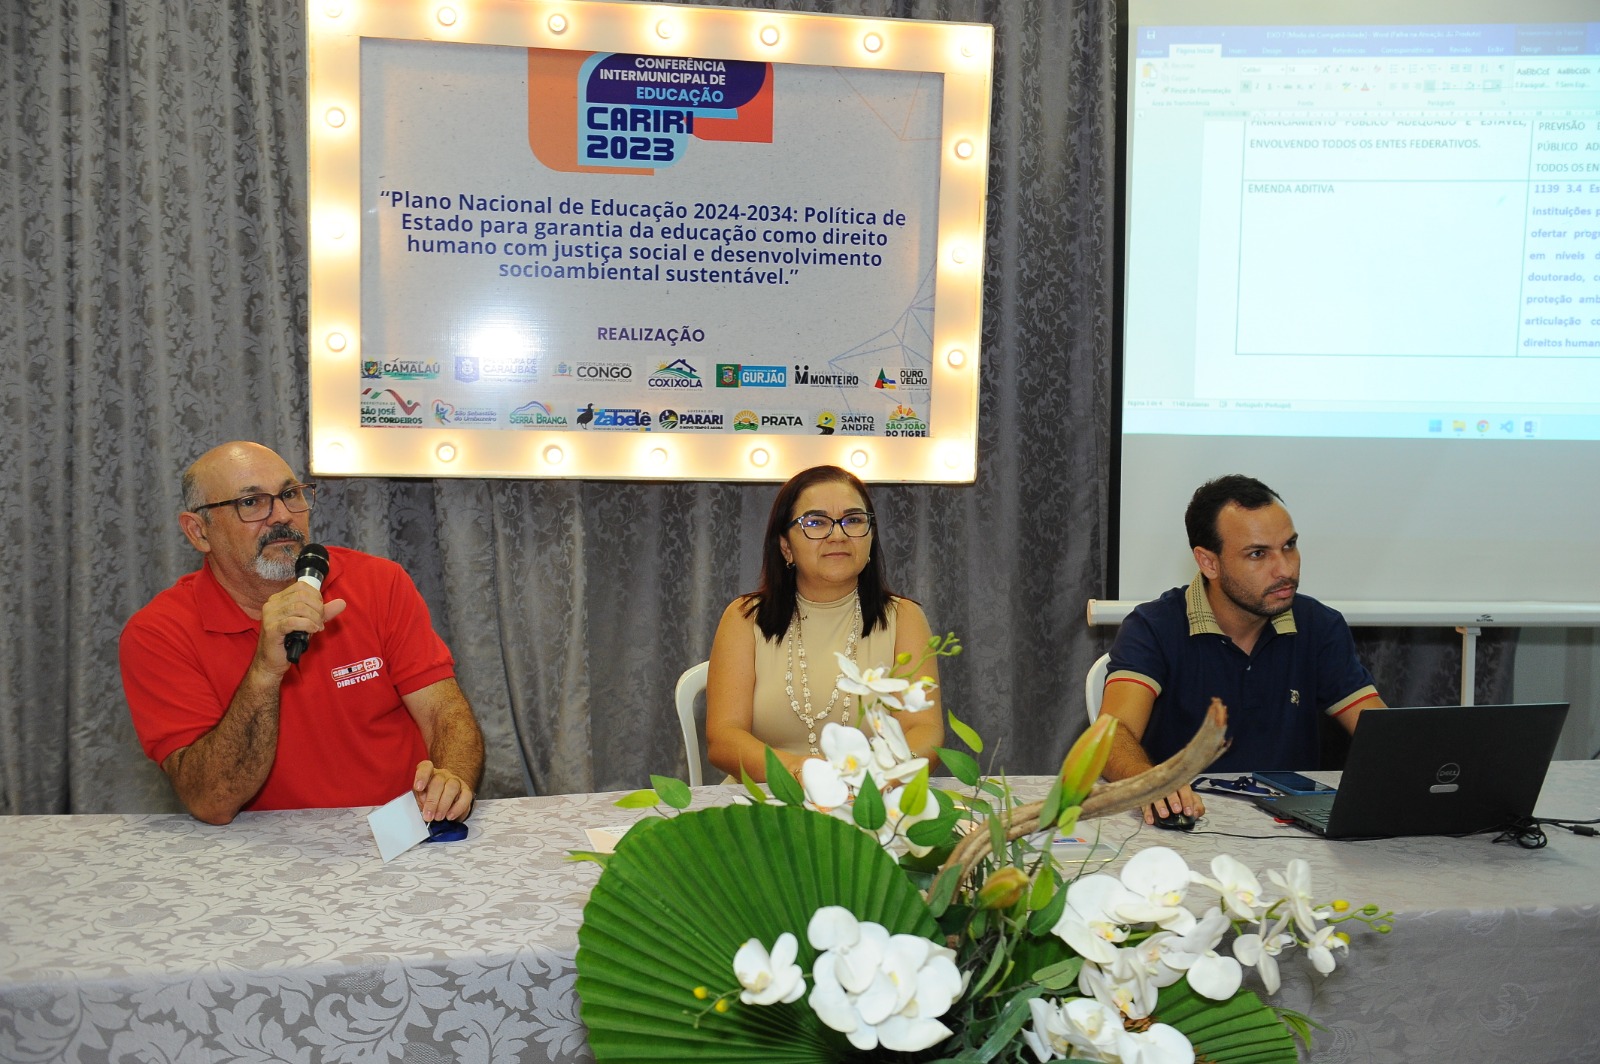 Conferencia-Intermunicipal-de-Educacao-do-Cariri-Paraibano-52 Monteiro sedia a 1ª Conferência Intermunicipal de Educação do Cariri Paraibano